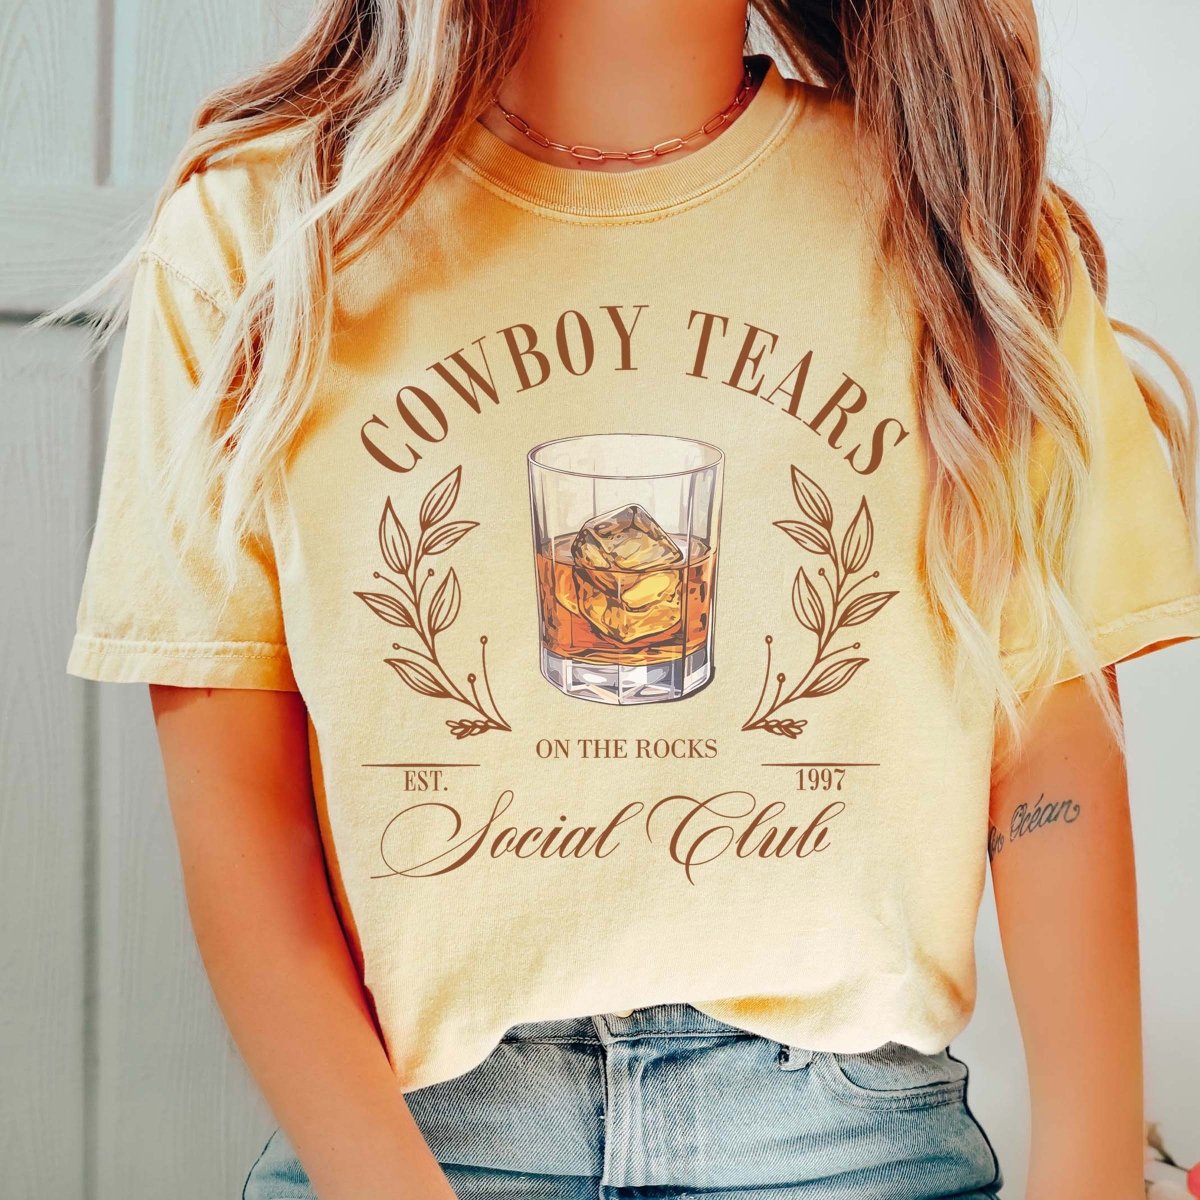 Cowboy Tears Social Club Wholesale Tee - Limeberry Designs